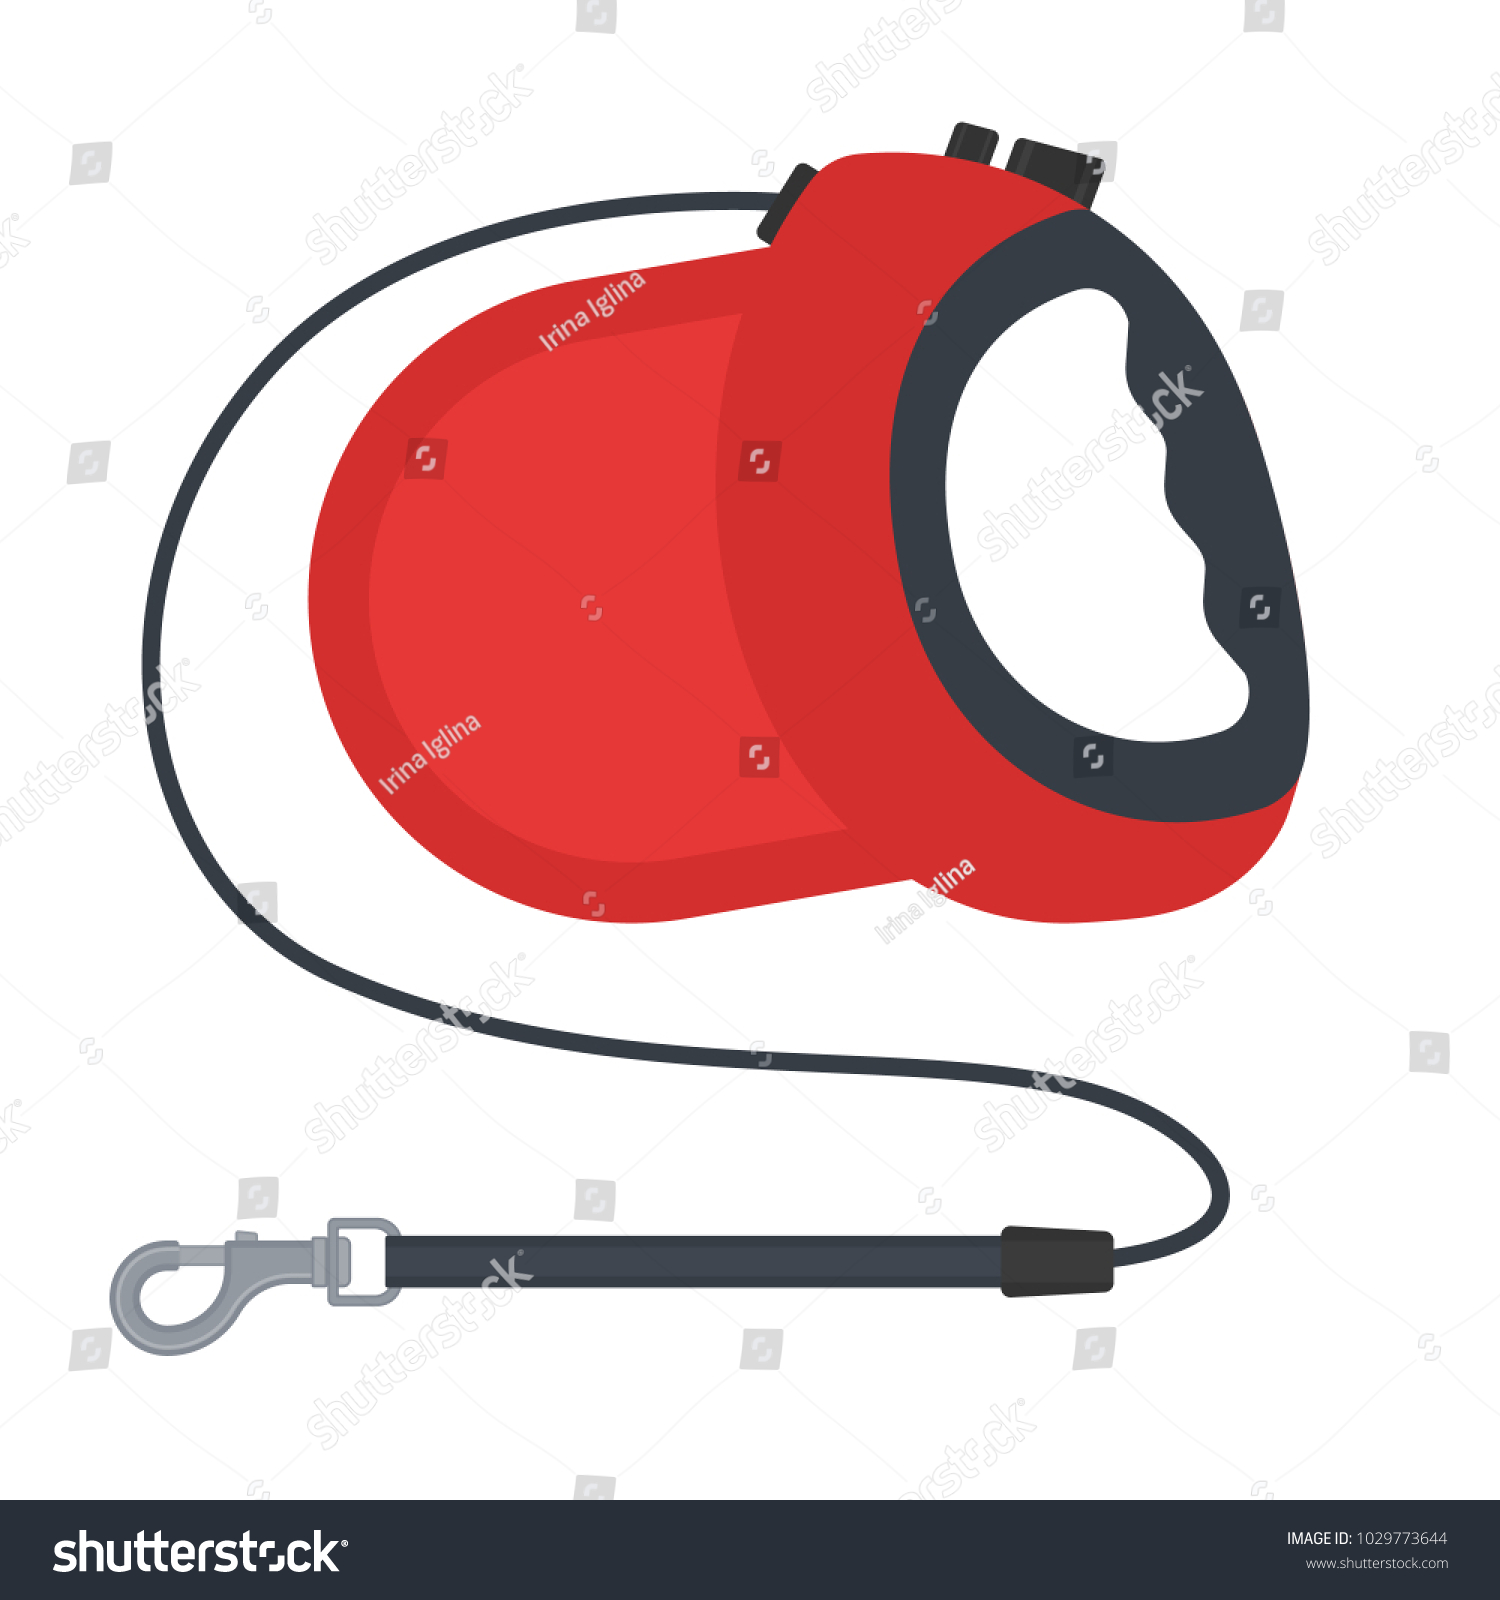 retractable cord leash